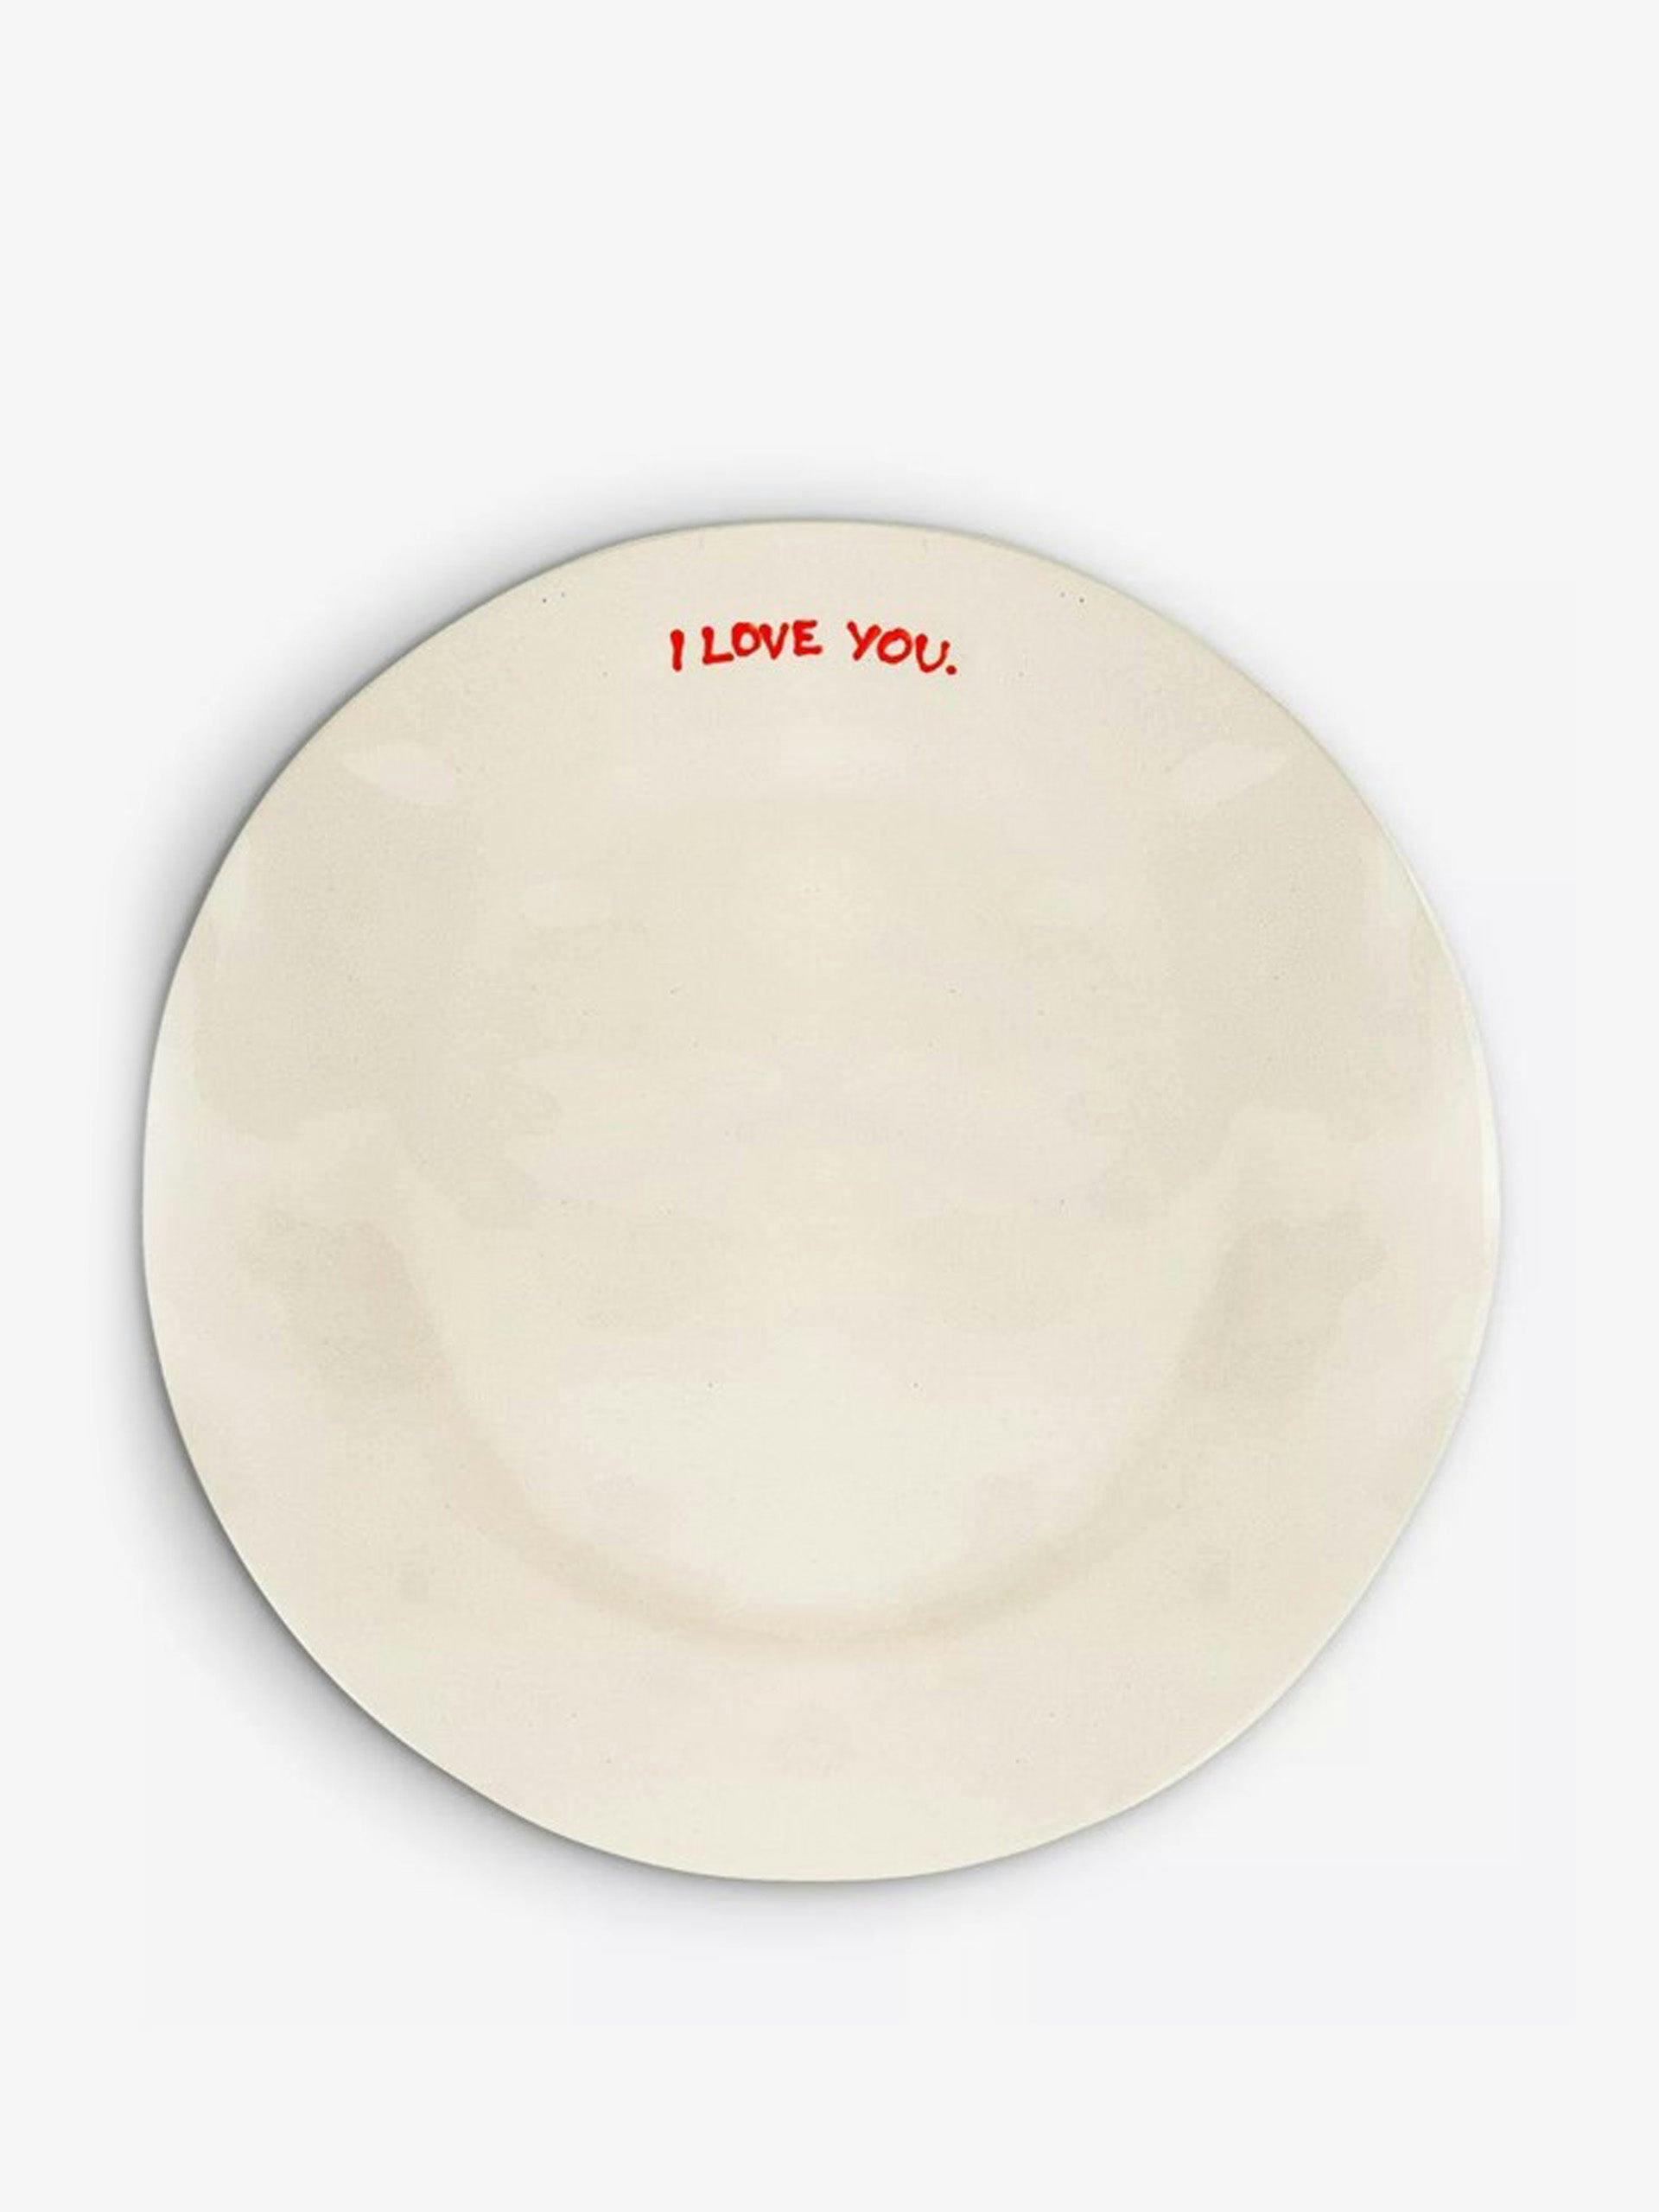 I Love You ceramic breakfast plate